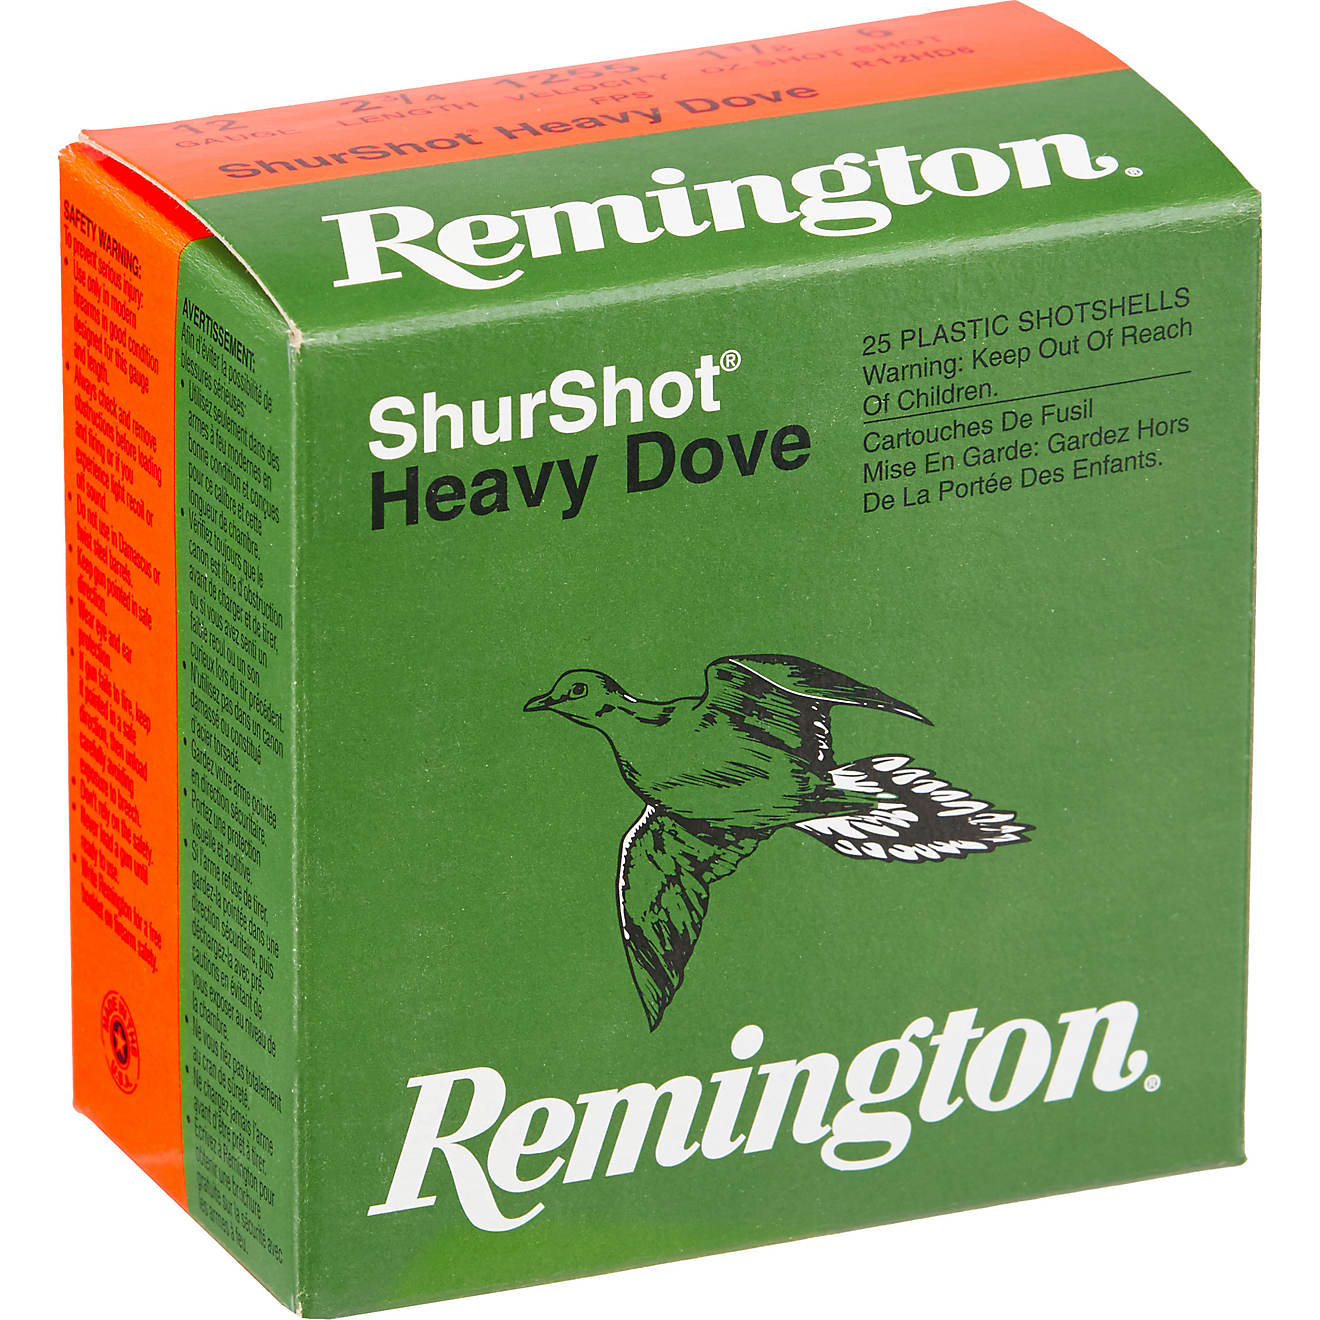 Remington 12 Gauge ShurShot Heavy Dove 6 Shotshells - 25 Rounds 